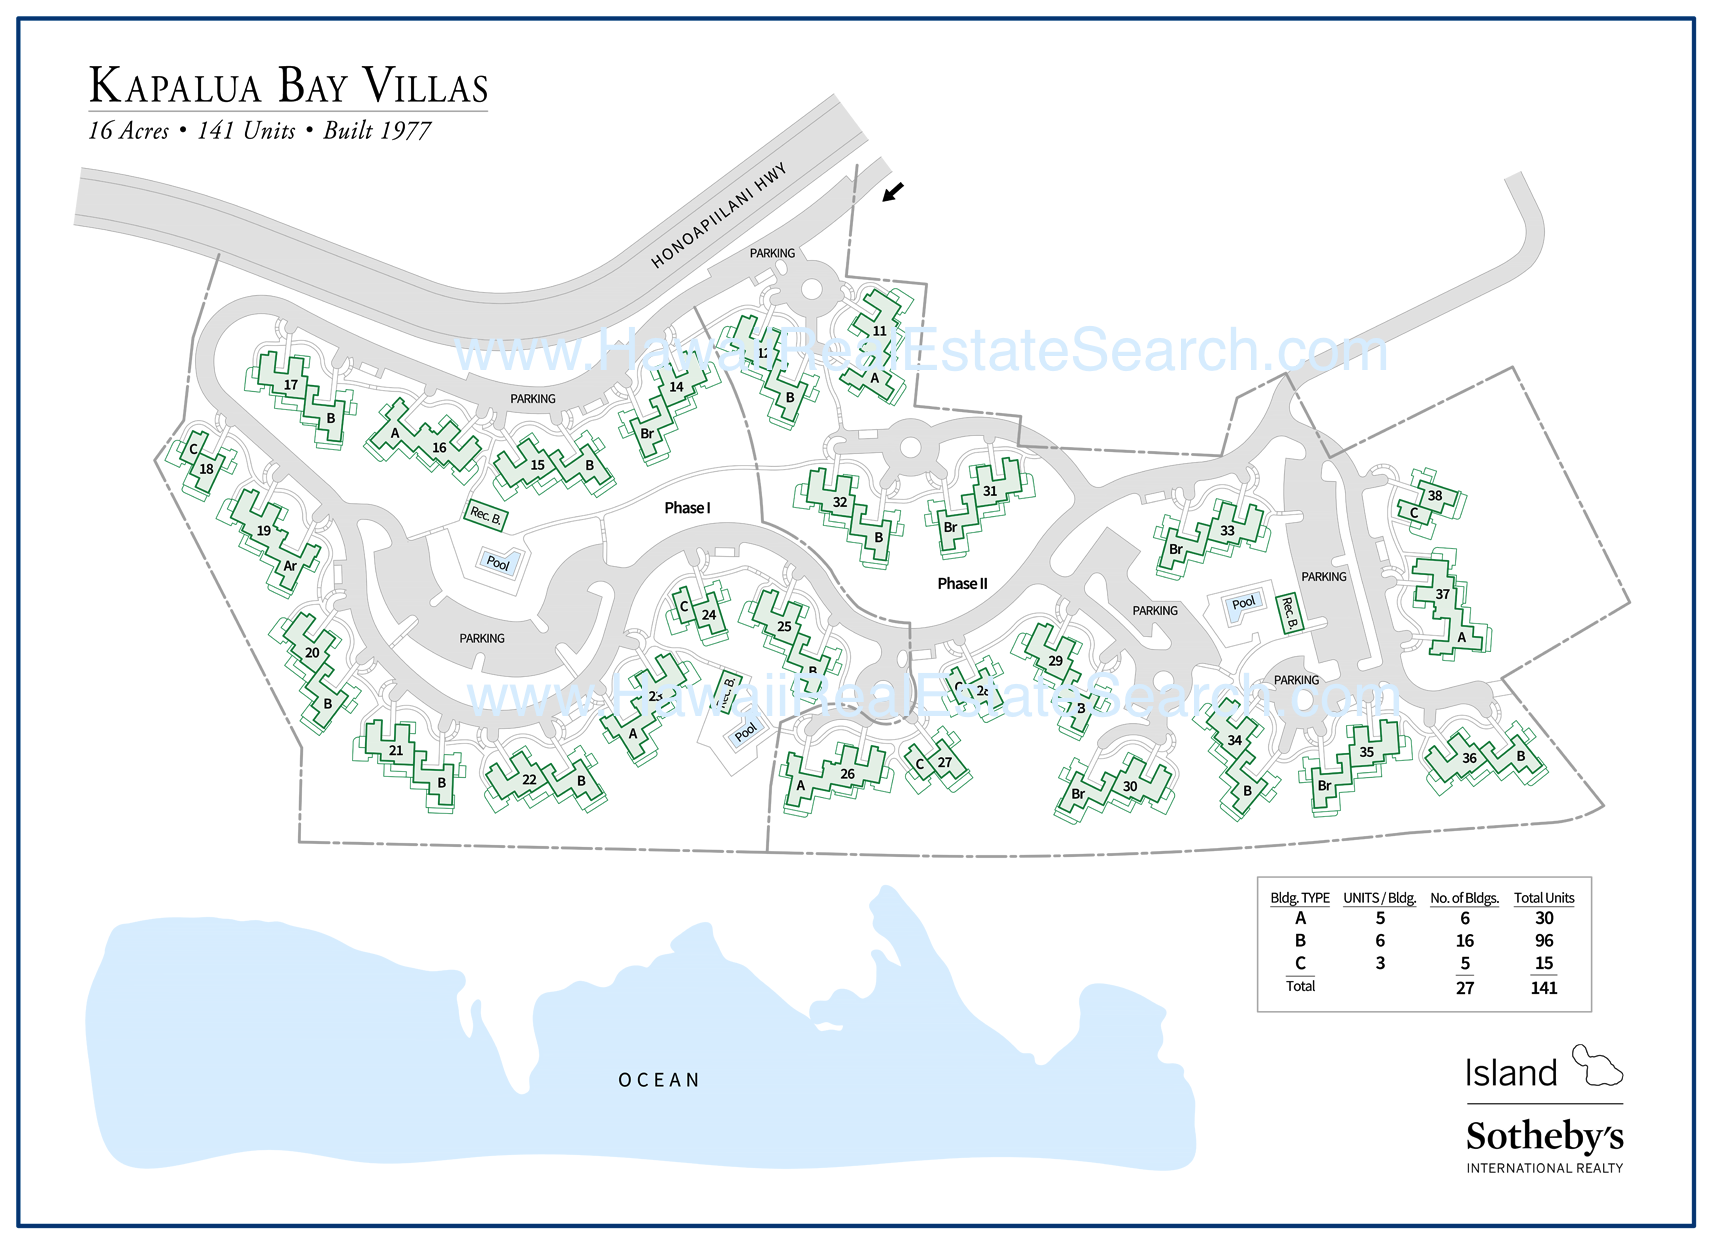 kapalua bay villas map 2018